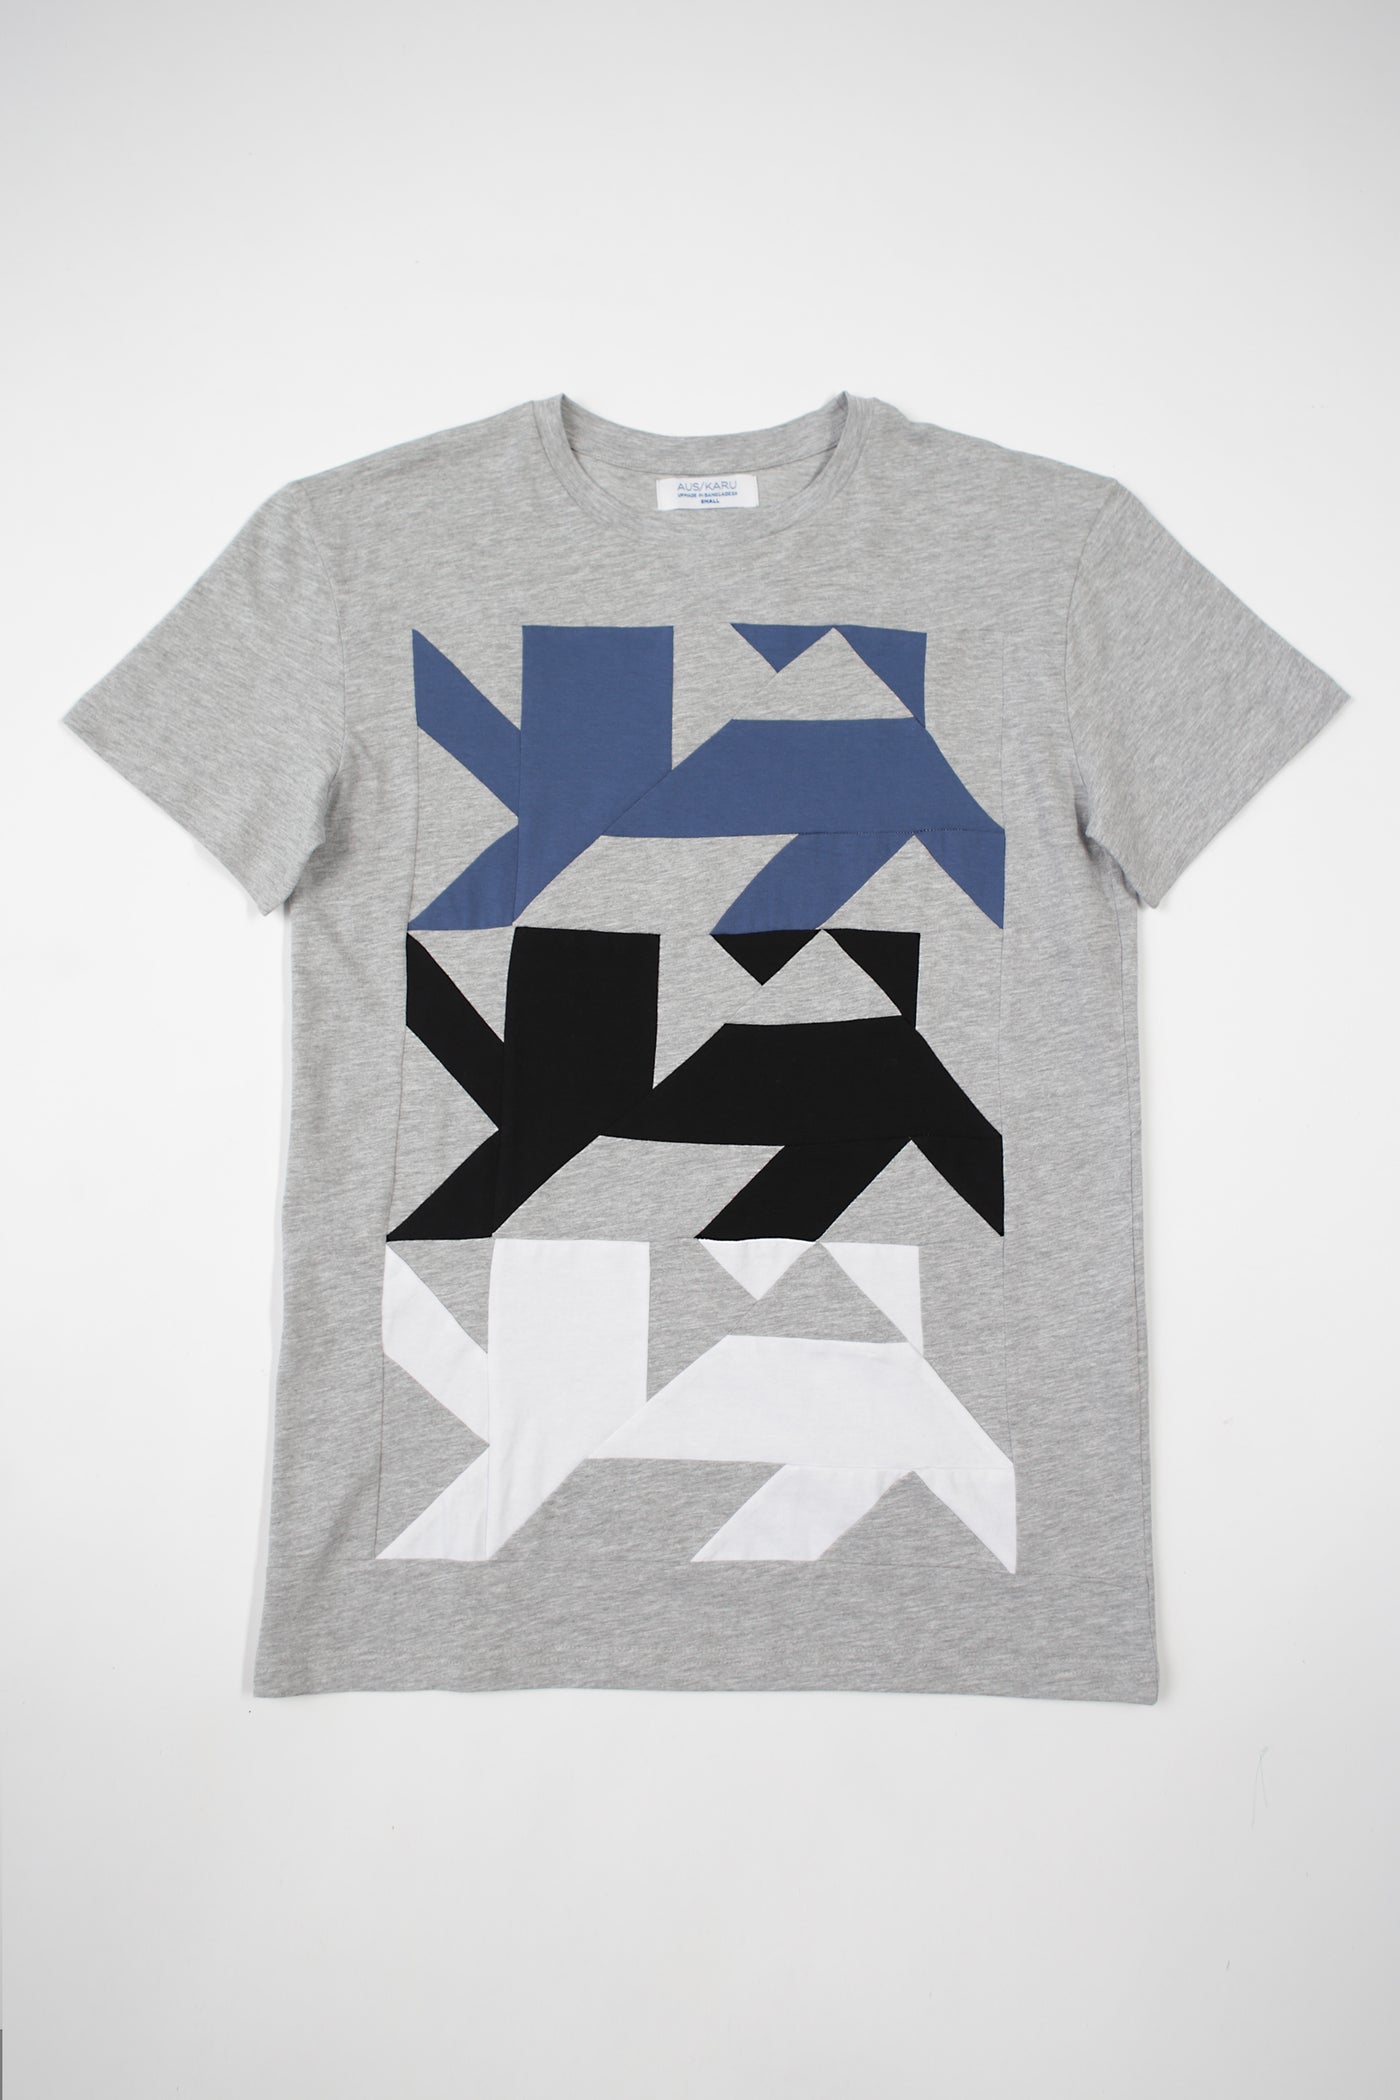 AUS/KARU Herren T-Shirt Löwe | Grau, dreifargib